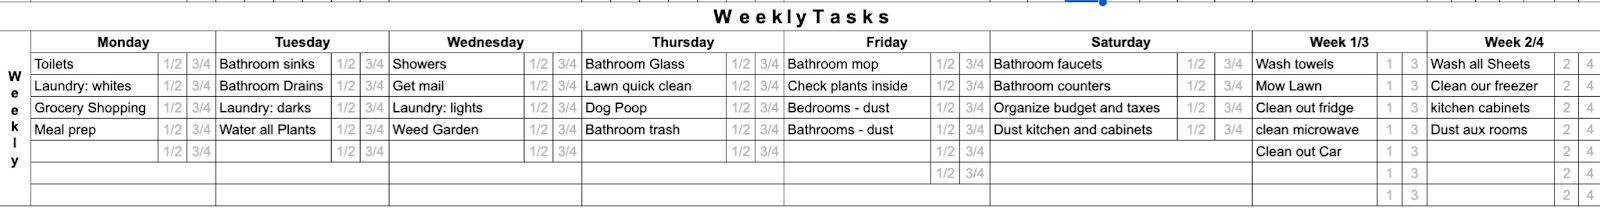 Weekly Tasks split by day